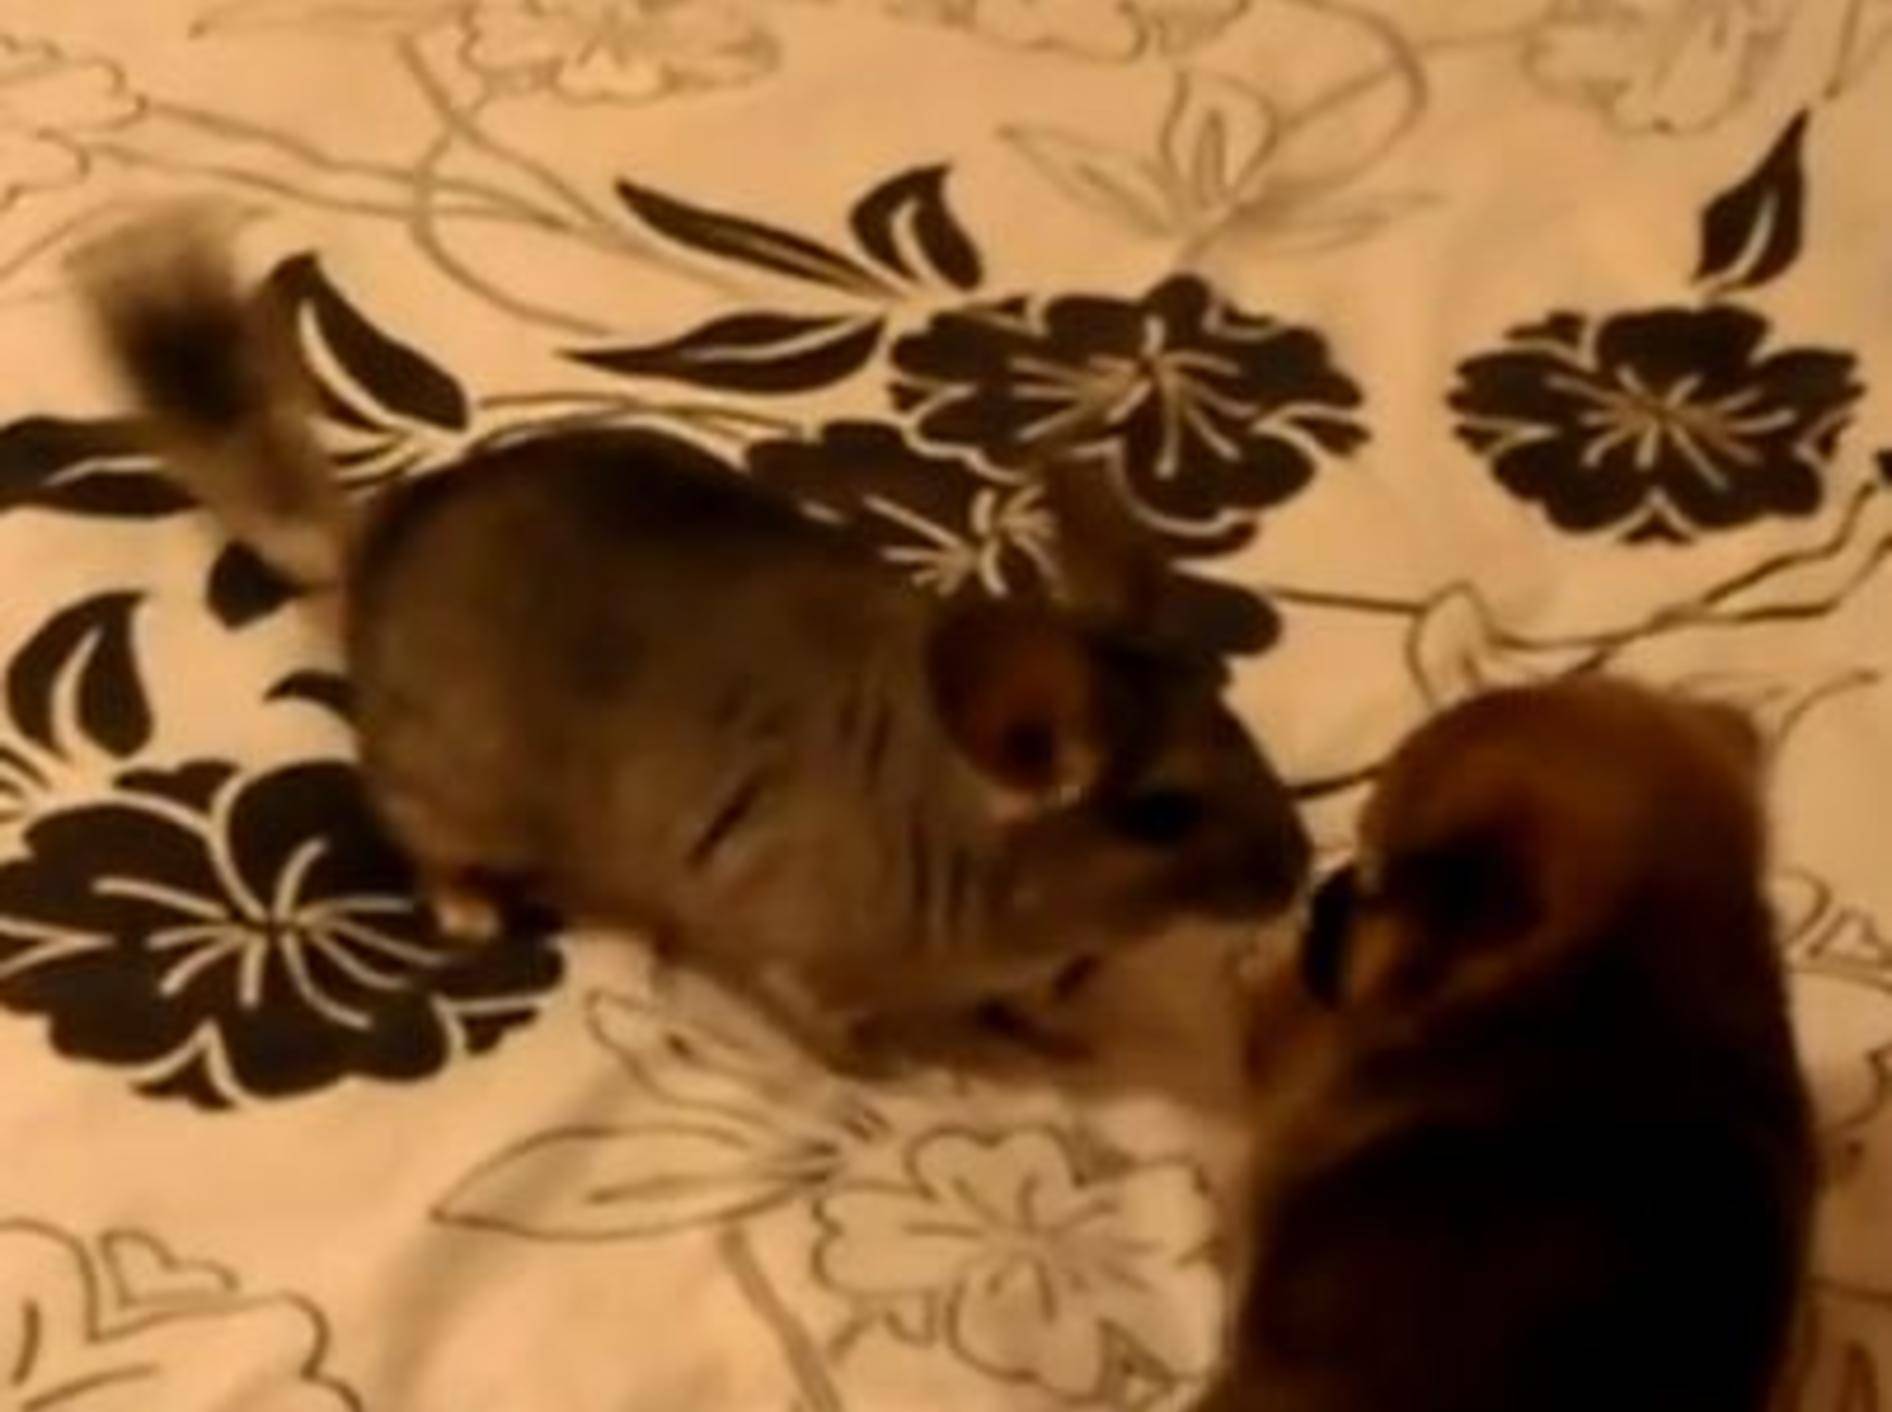 Süße Begegnung: Chinchilla ärgert einen Hundewelpen – Bild: YouTube / Avram Behar